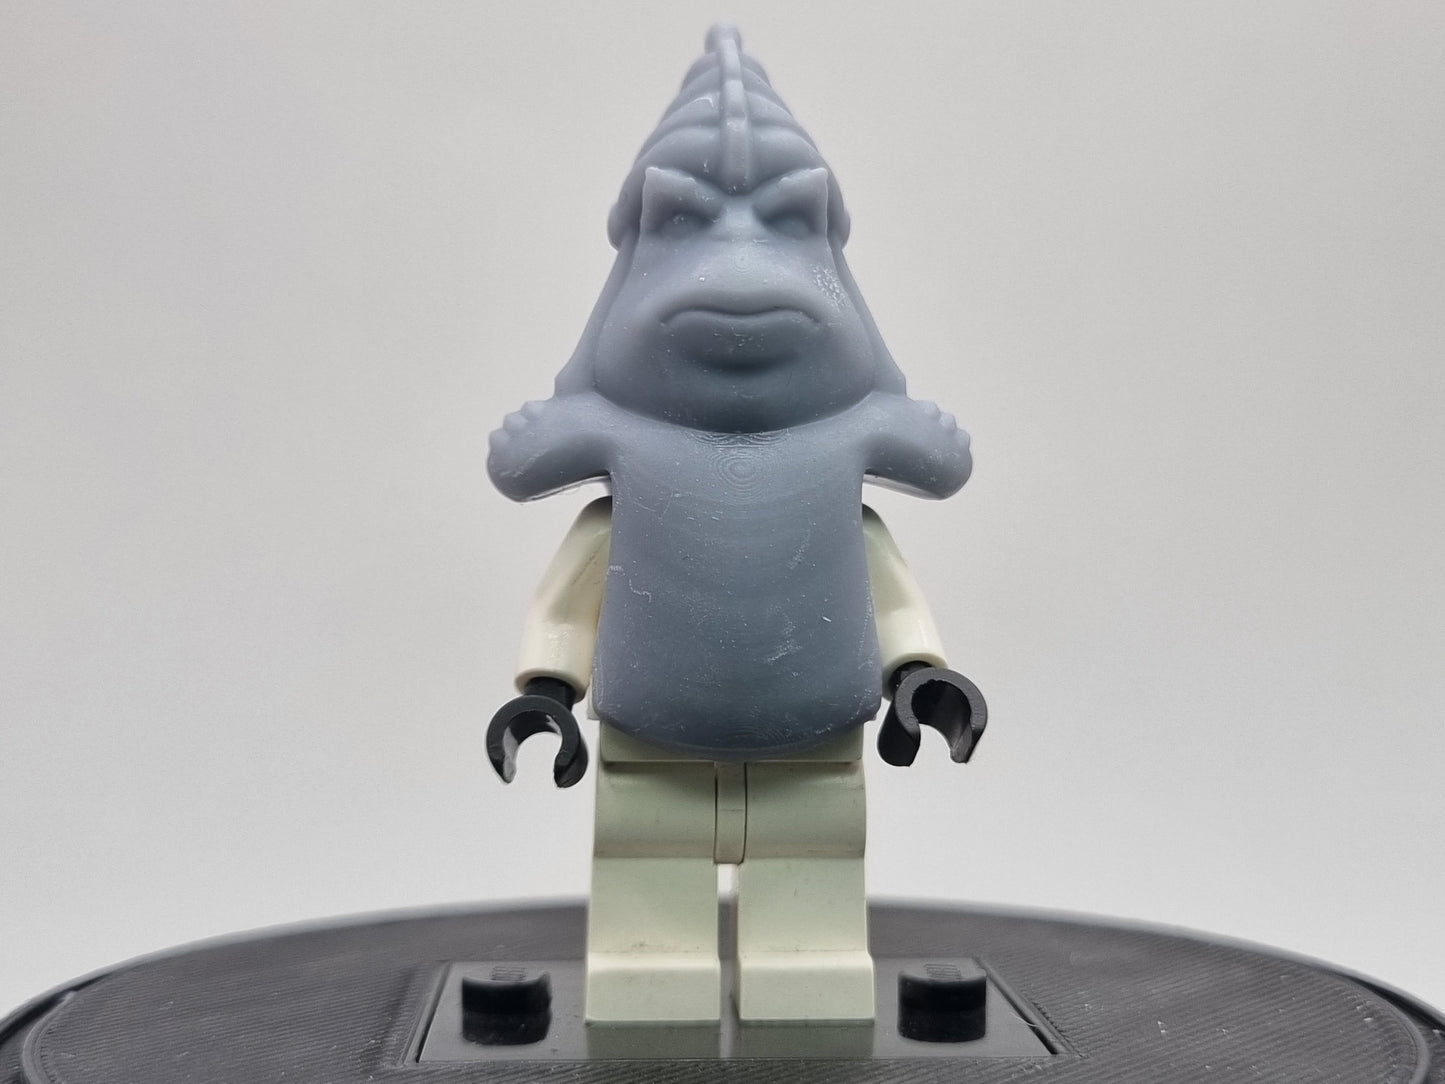 Building toy custom 3D printed big water boss!